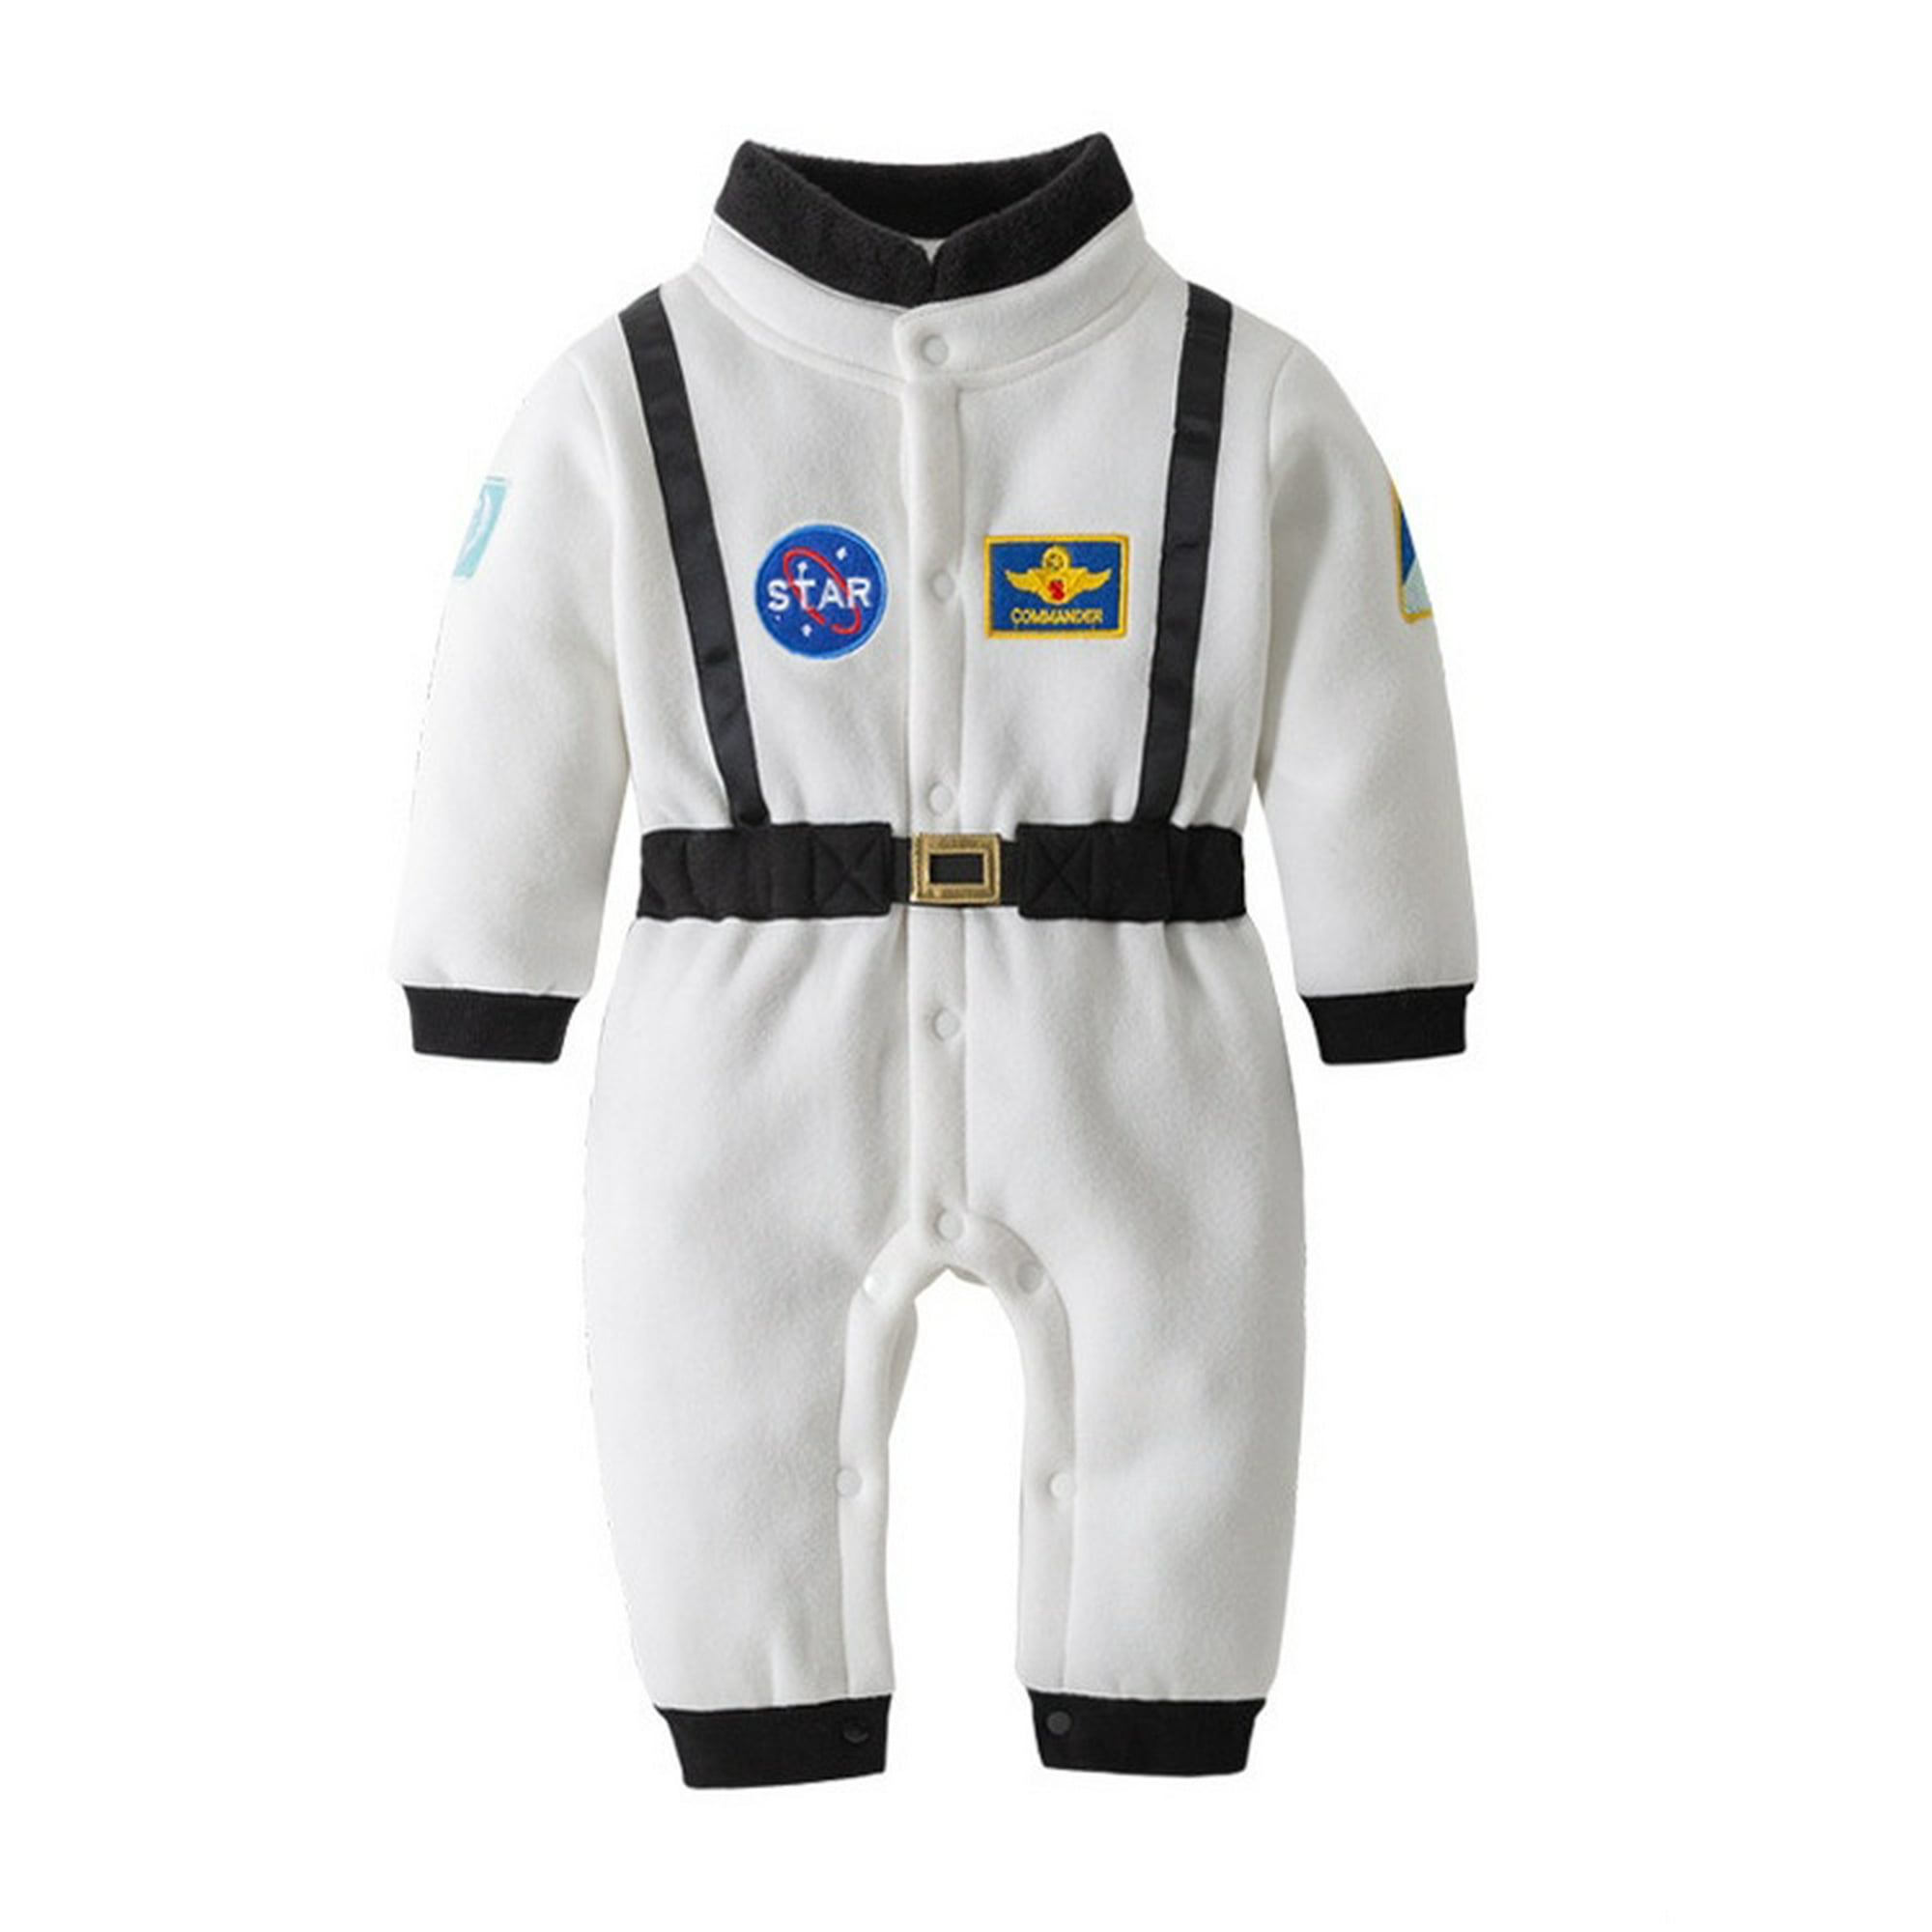 Traje de Halloween Disfraz de Bebé Niña Astronauta (Blanco, 12-18